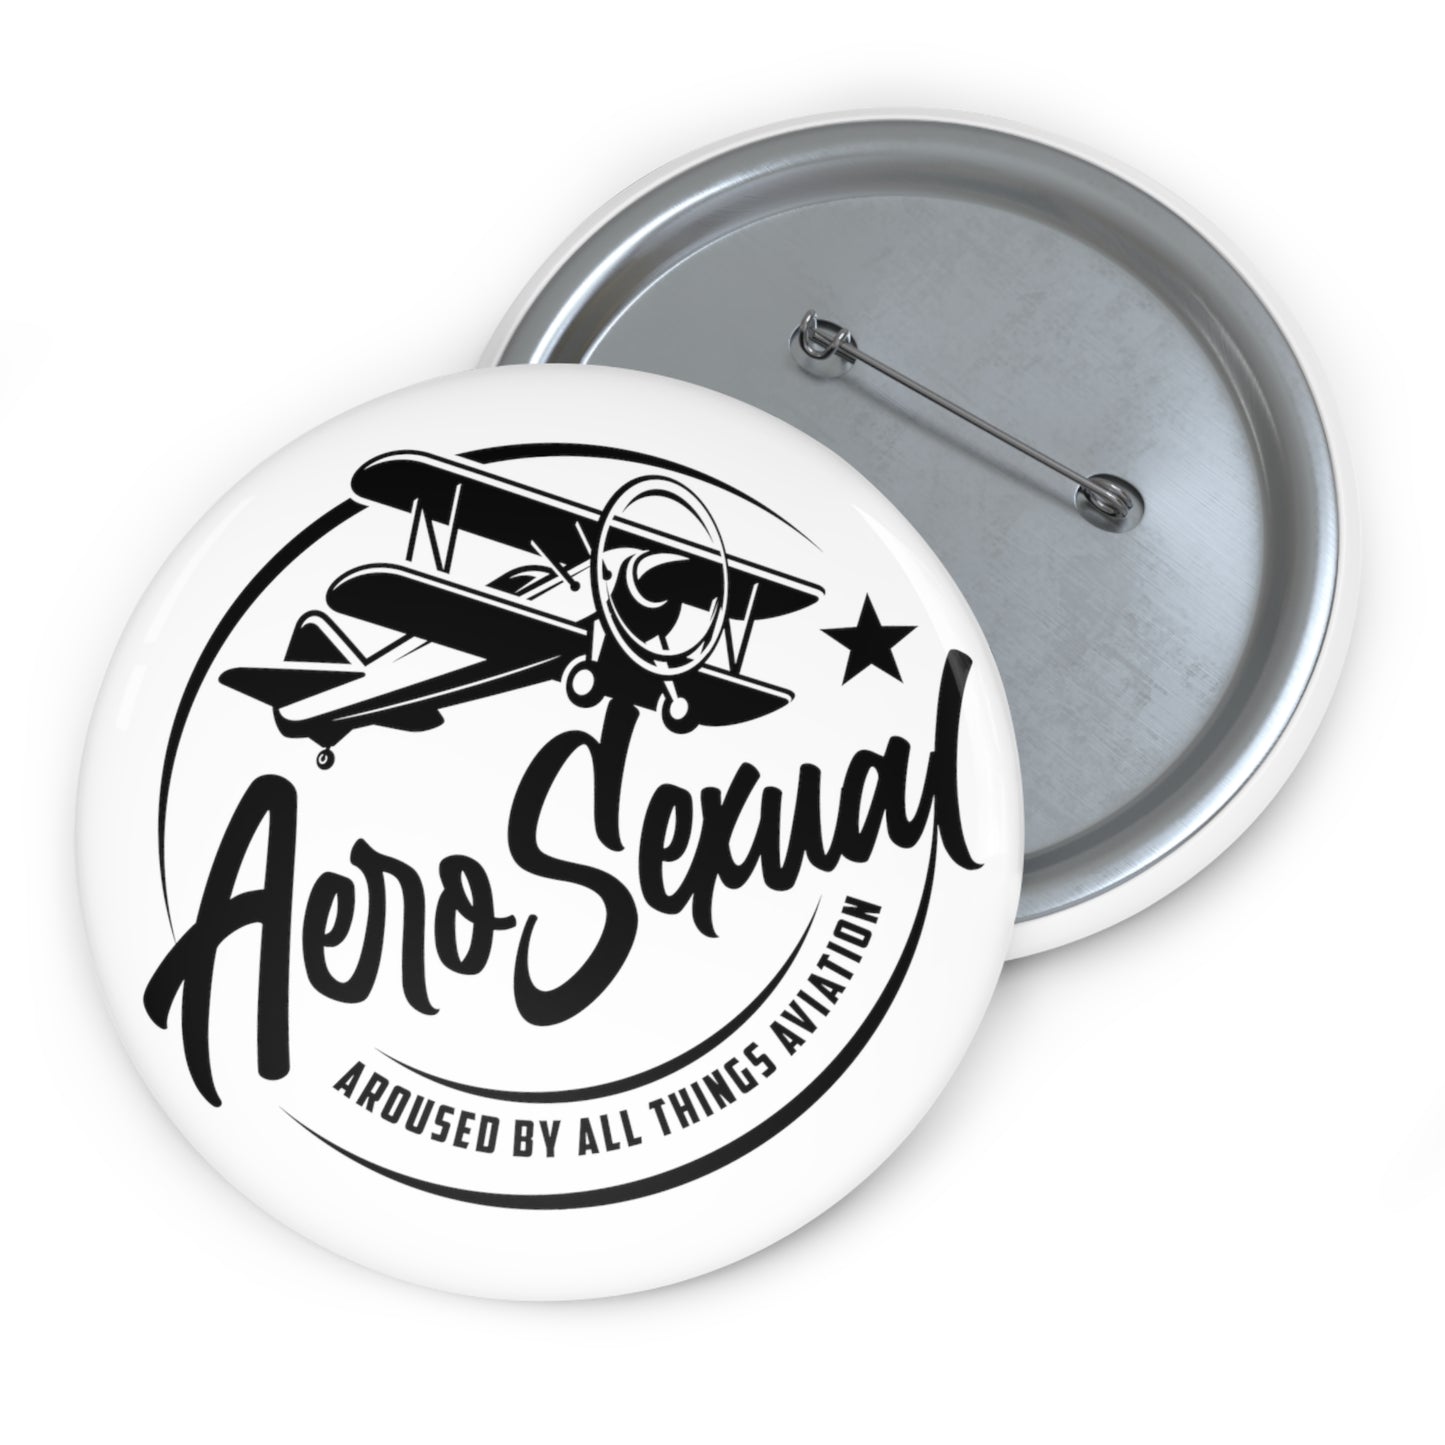 Aerosexual Button (biplane)